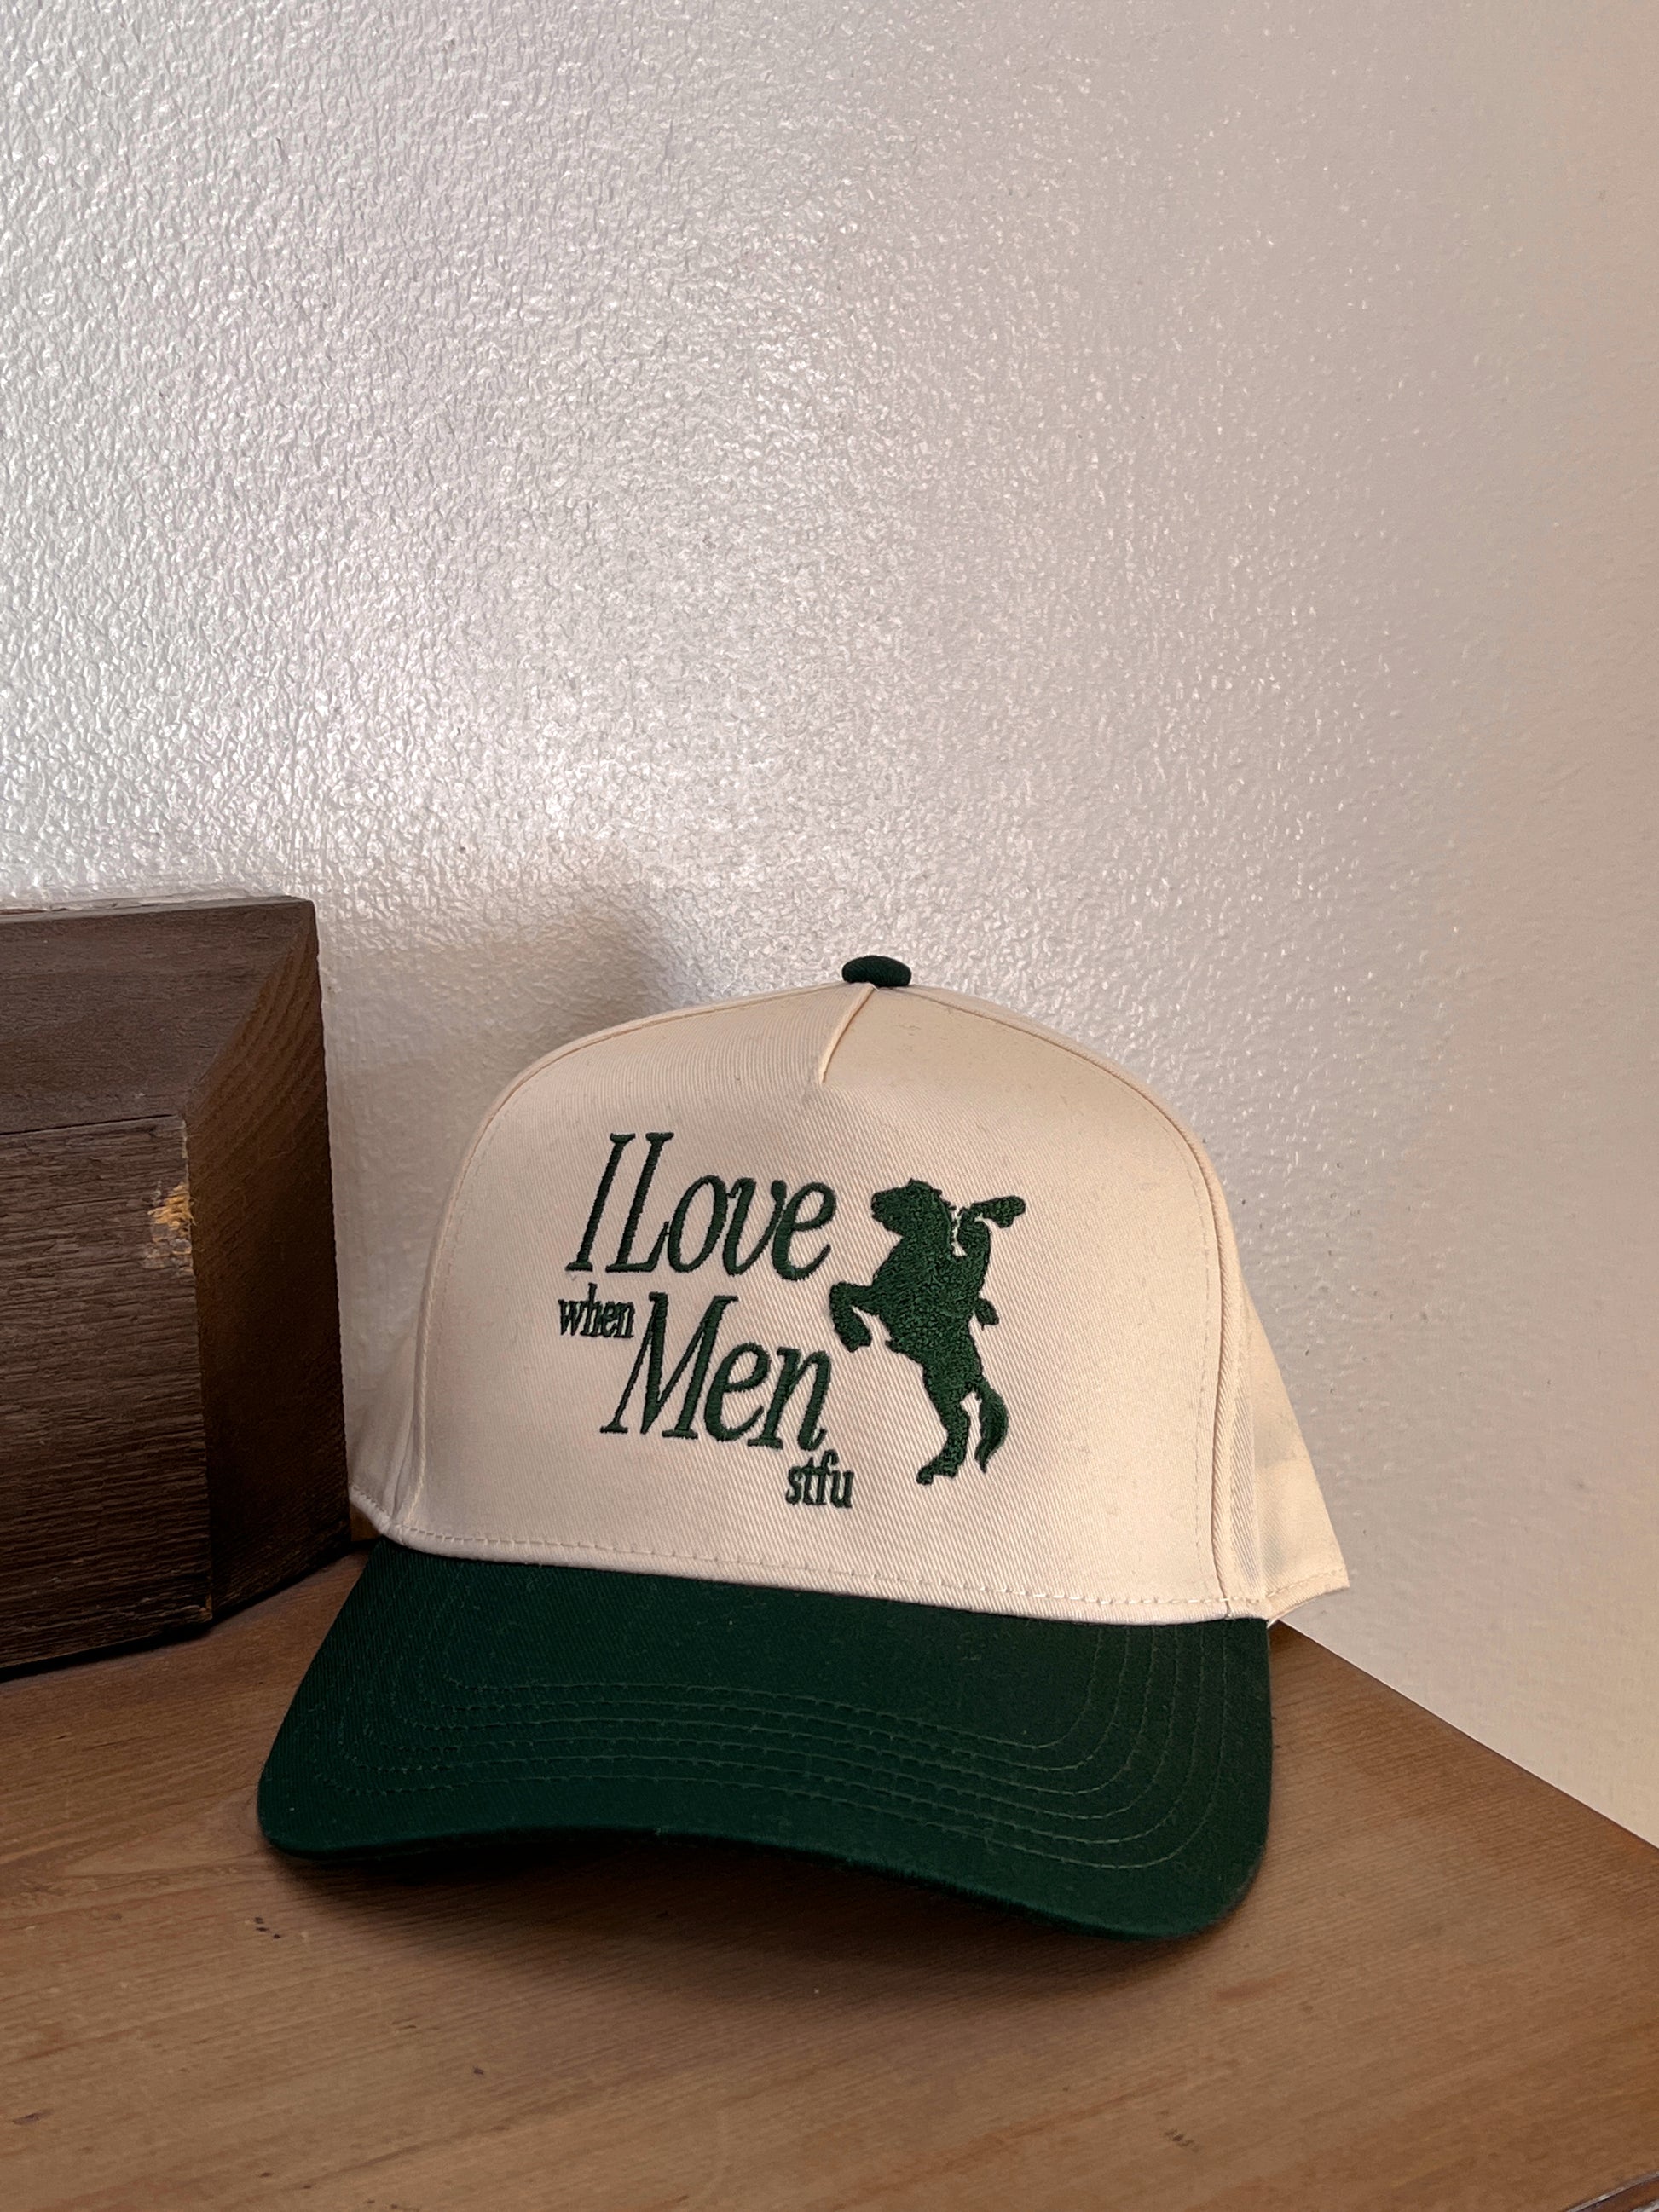 I Love Men Vintage Trucker Hat